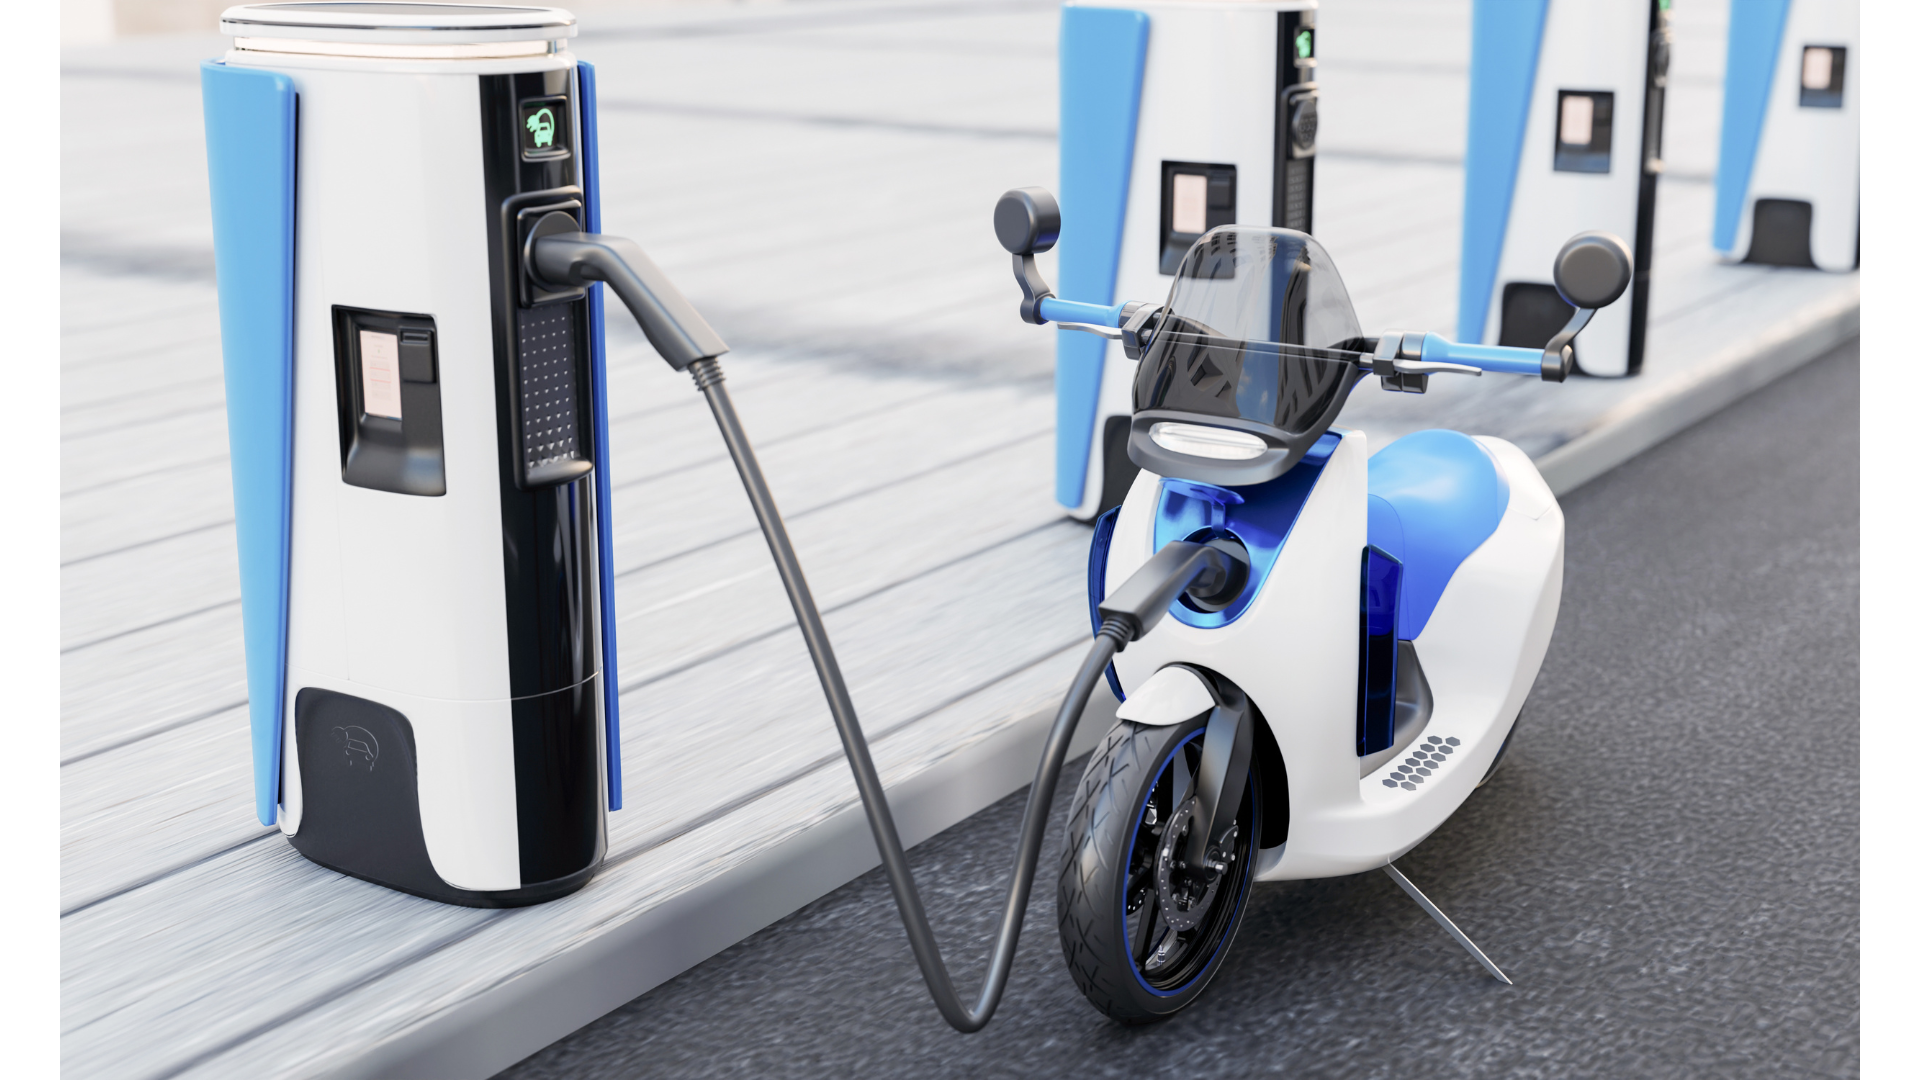 SMOGO ของจีนลงทุนผลิตจักรยานยนต์ EV-แบตเตอรี่-Battery Swapping ใน EEC